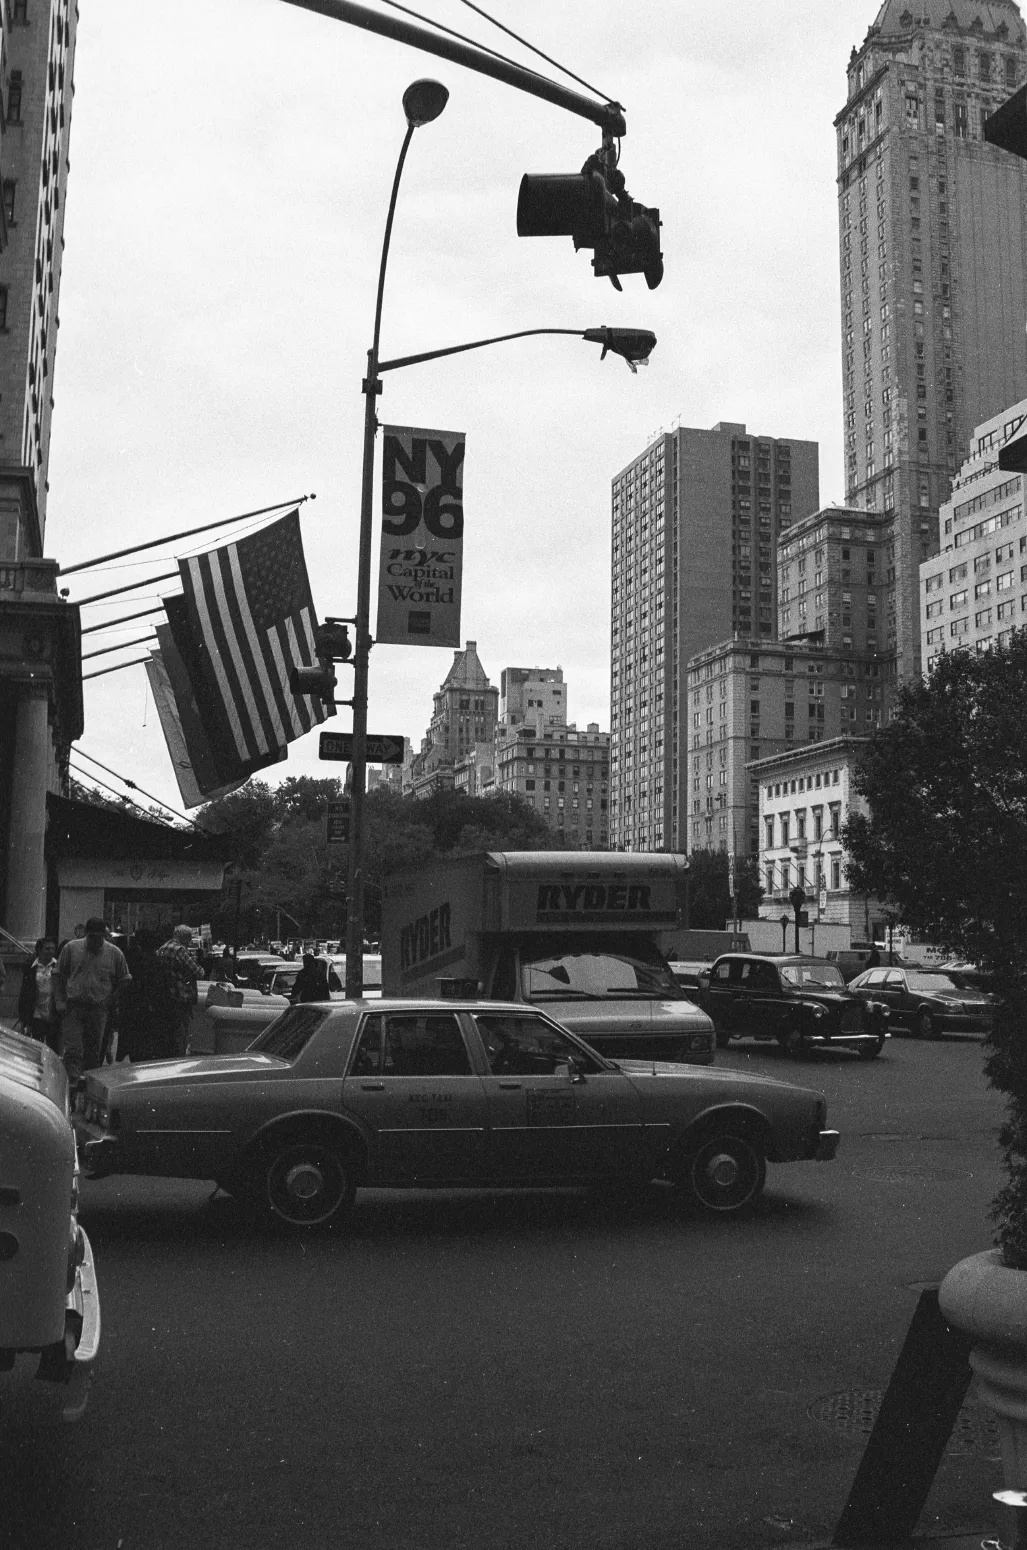 New York #2. New York, October 1996